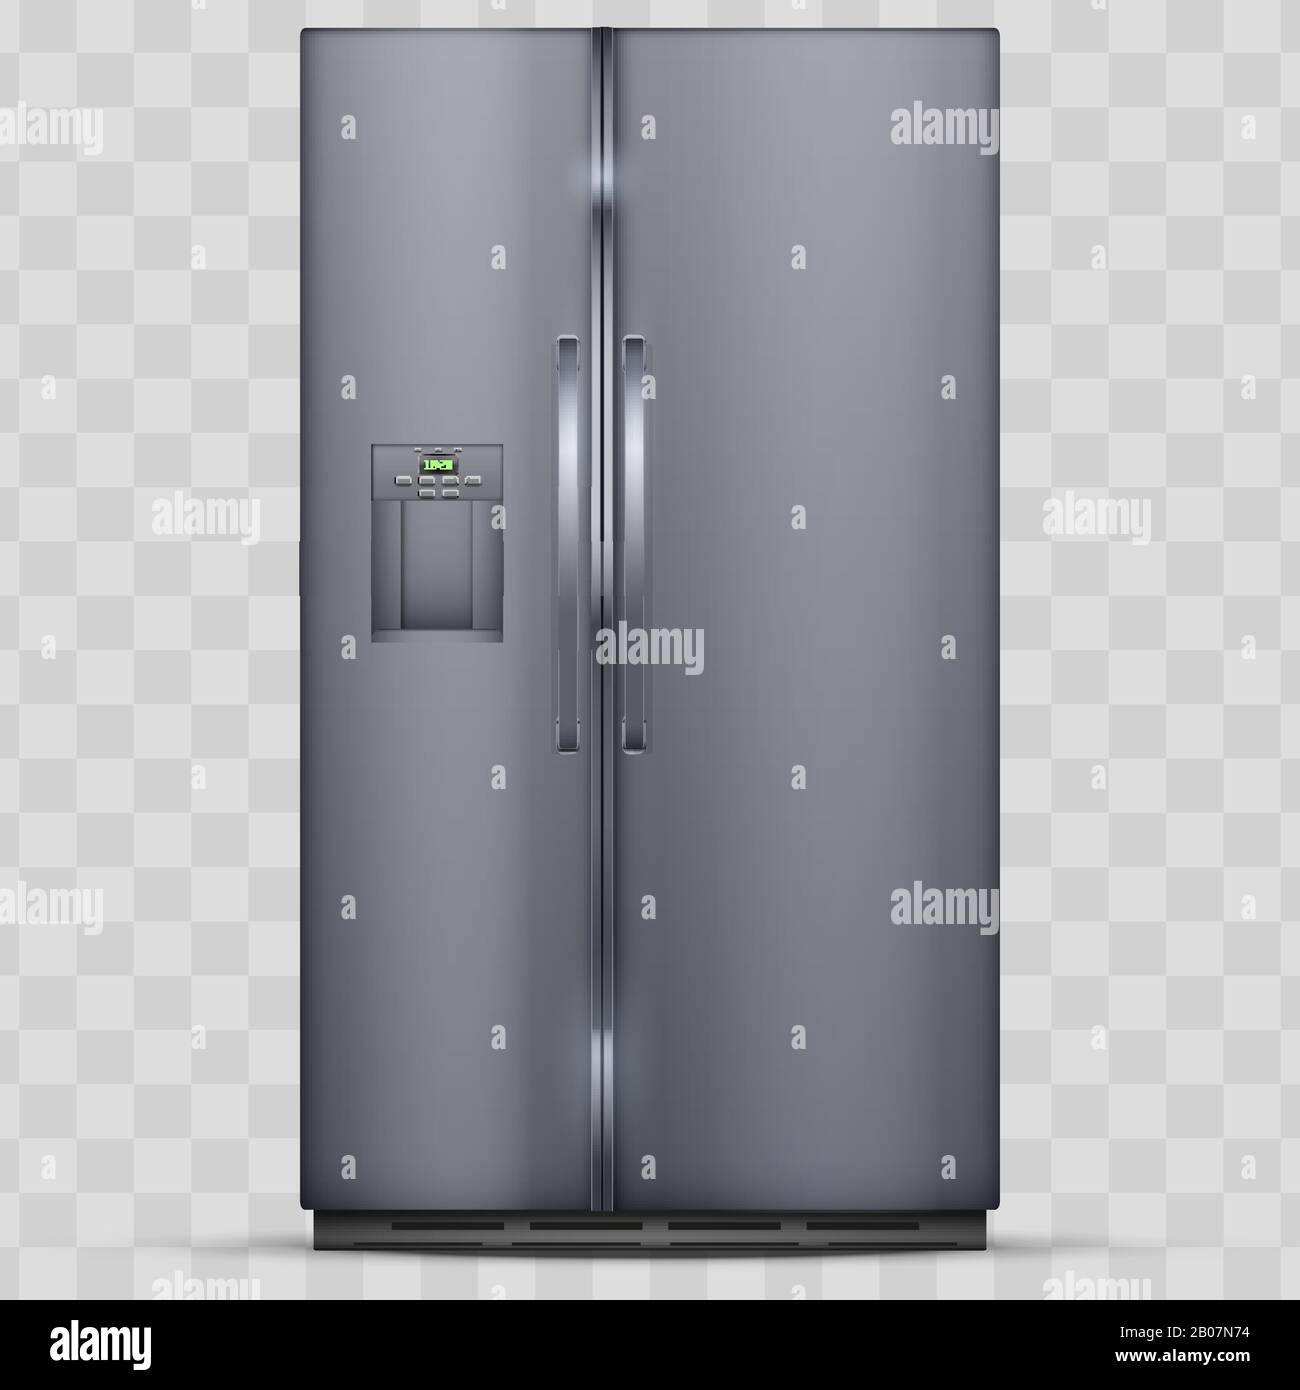 Modern Smart Fridge Freezer refrigerator. Stock Vector